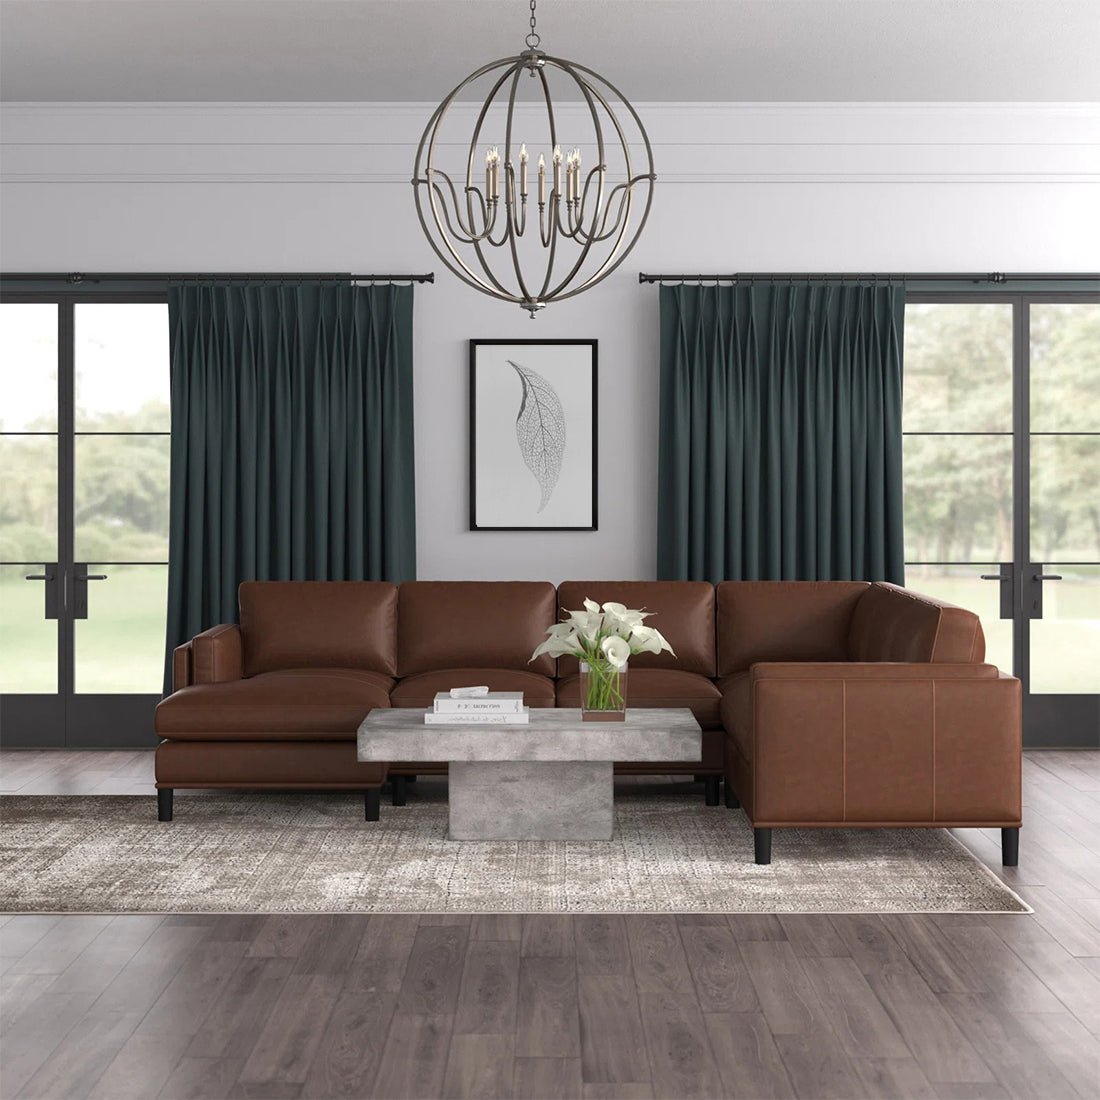 Stanley 6 Seater U Shape Leatherette Modular Sofa for Living Room - (Dark Brown) - Torque India